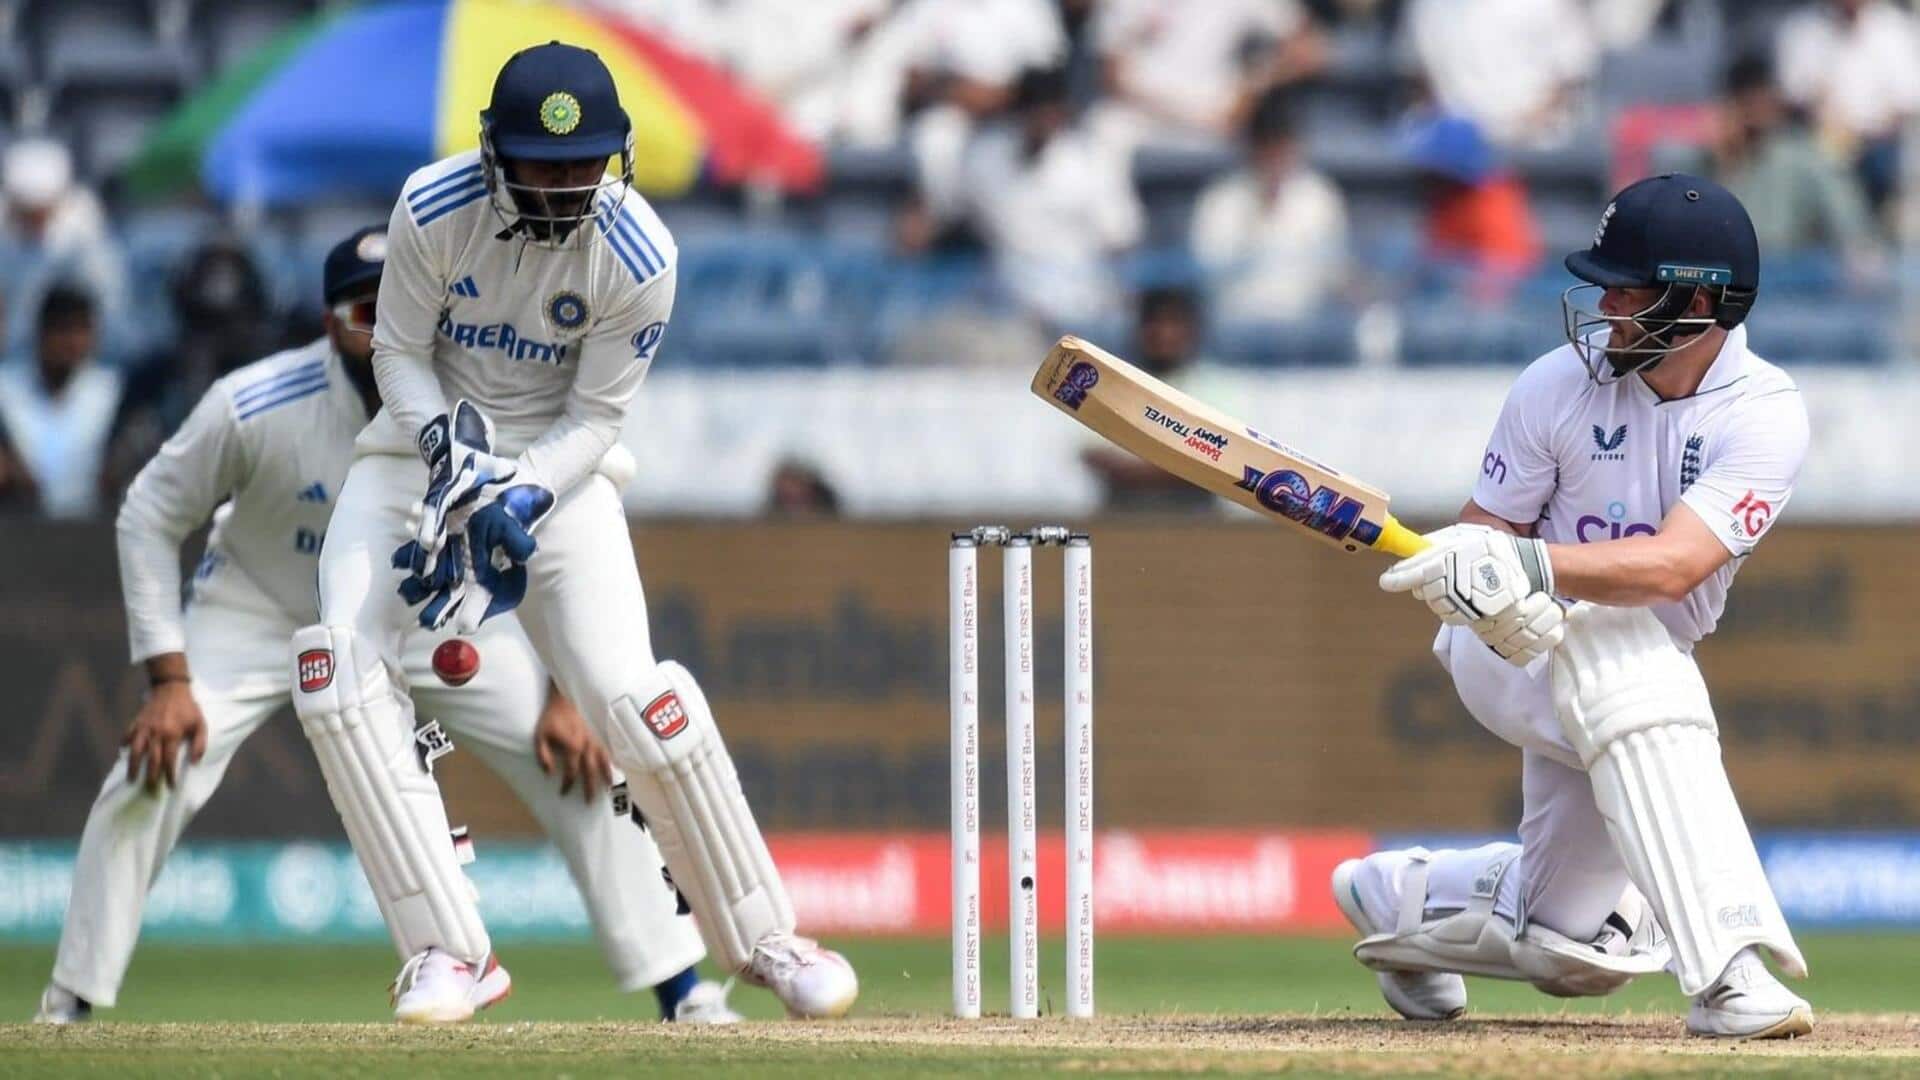 Ben Duckett averages 21.28 in India (Test cricket): Key stats